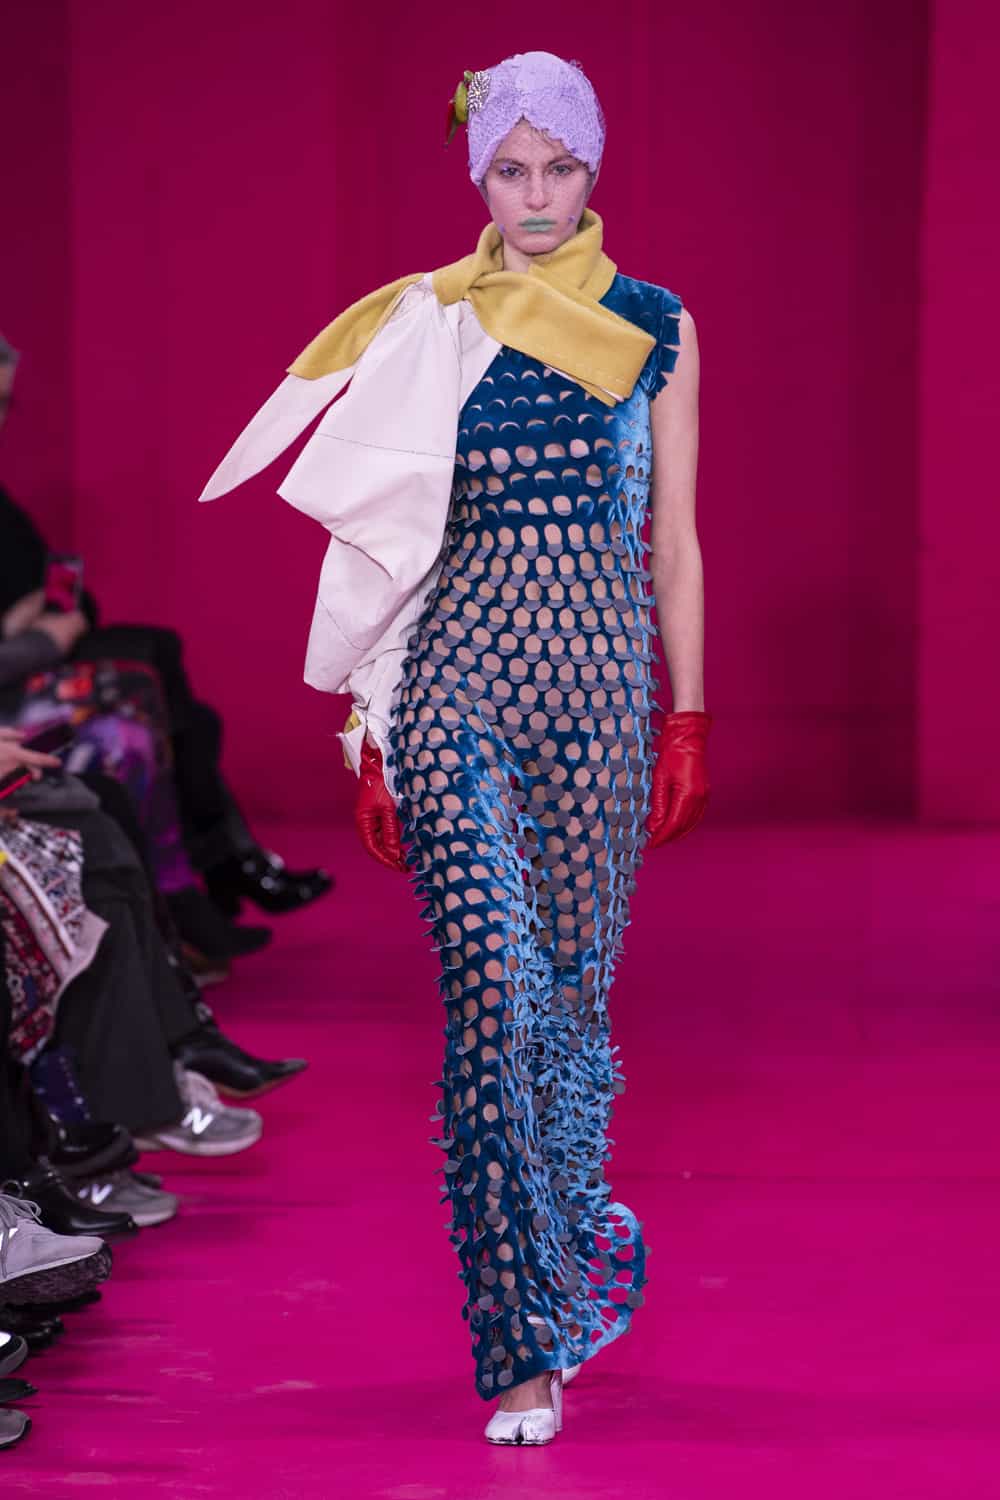 Sofia Achaval's Complete Spring 2020 Paris Fashion Week Diary